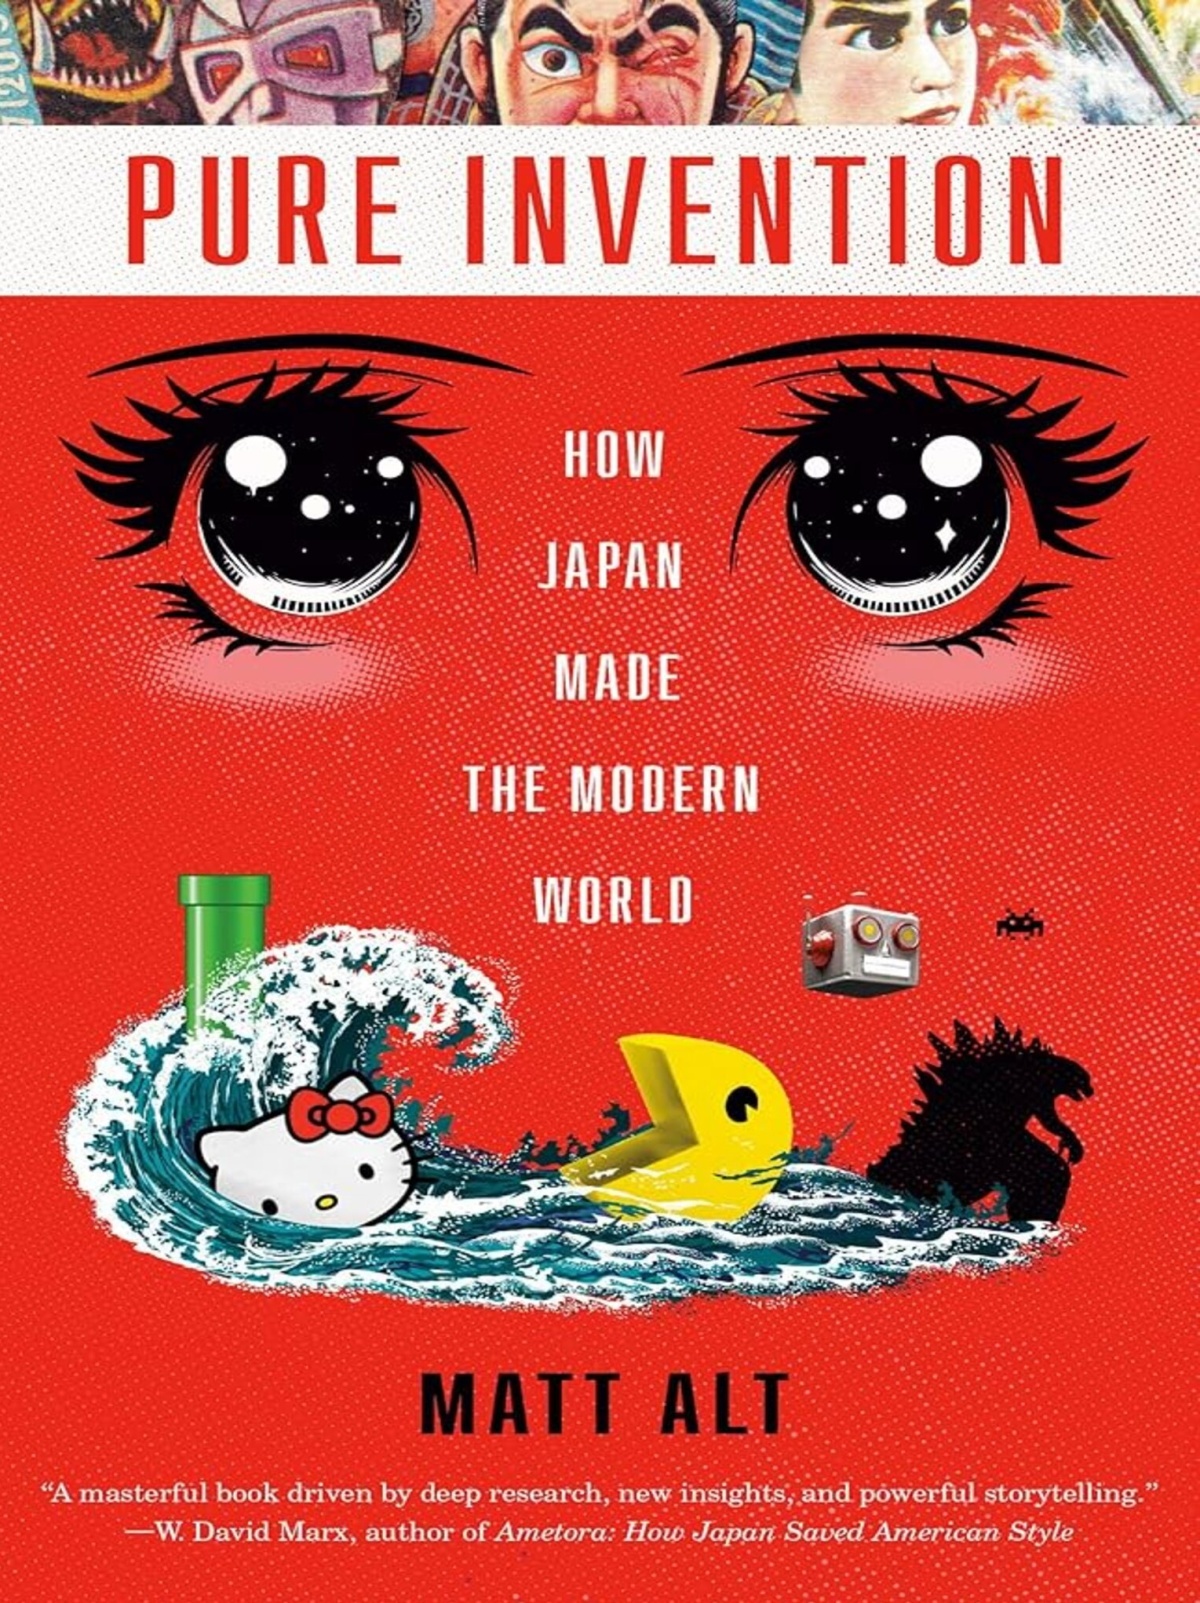 "Pure Invention: How Japan Made the Modern World," by Matt Alt